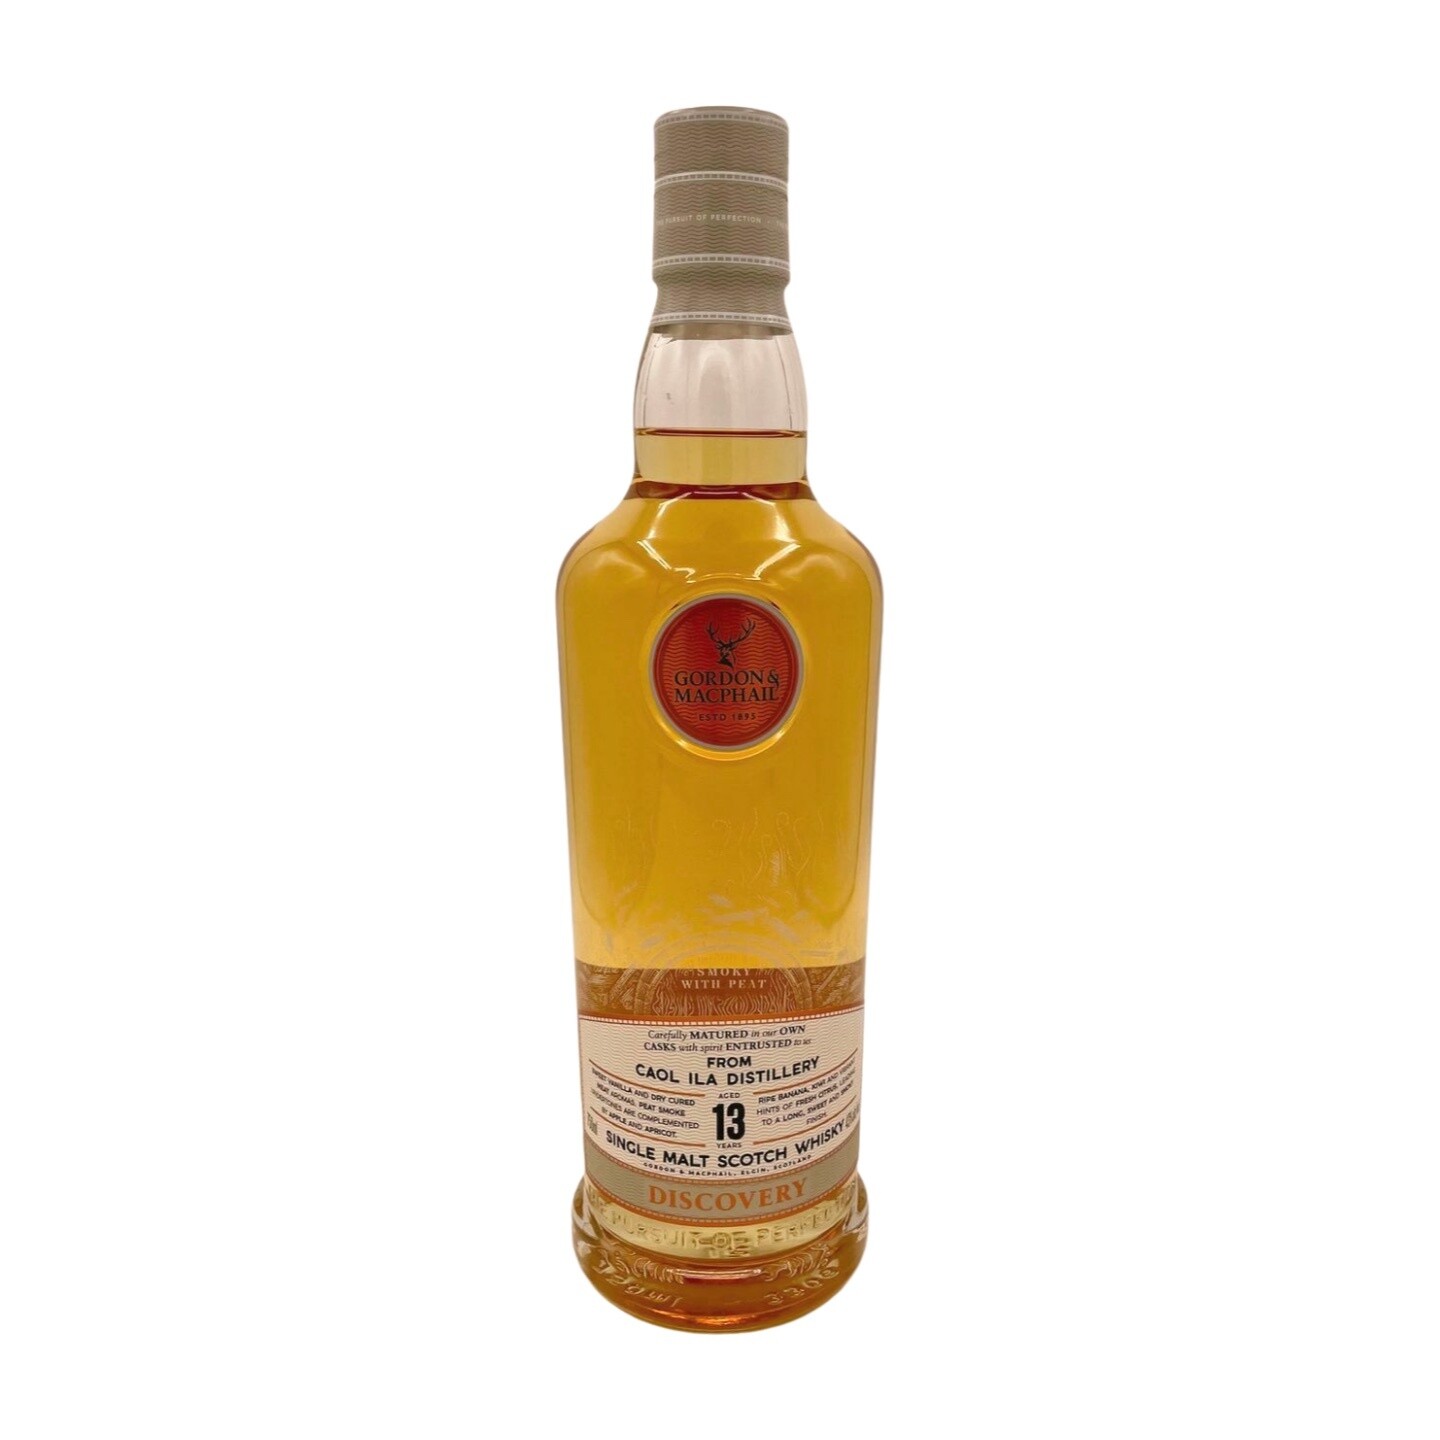 Caol Ila (Gordon & MacPhail) "Discovery" 13 Year Islay Single Malt Scotch Whisky